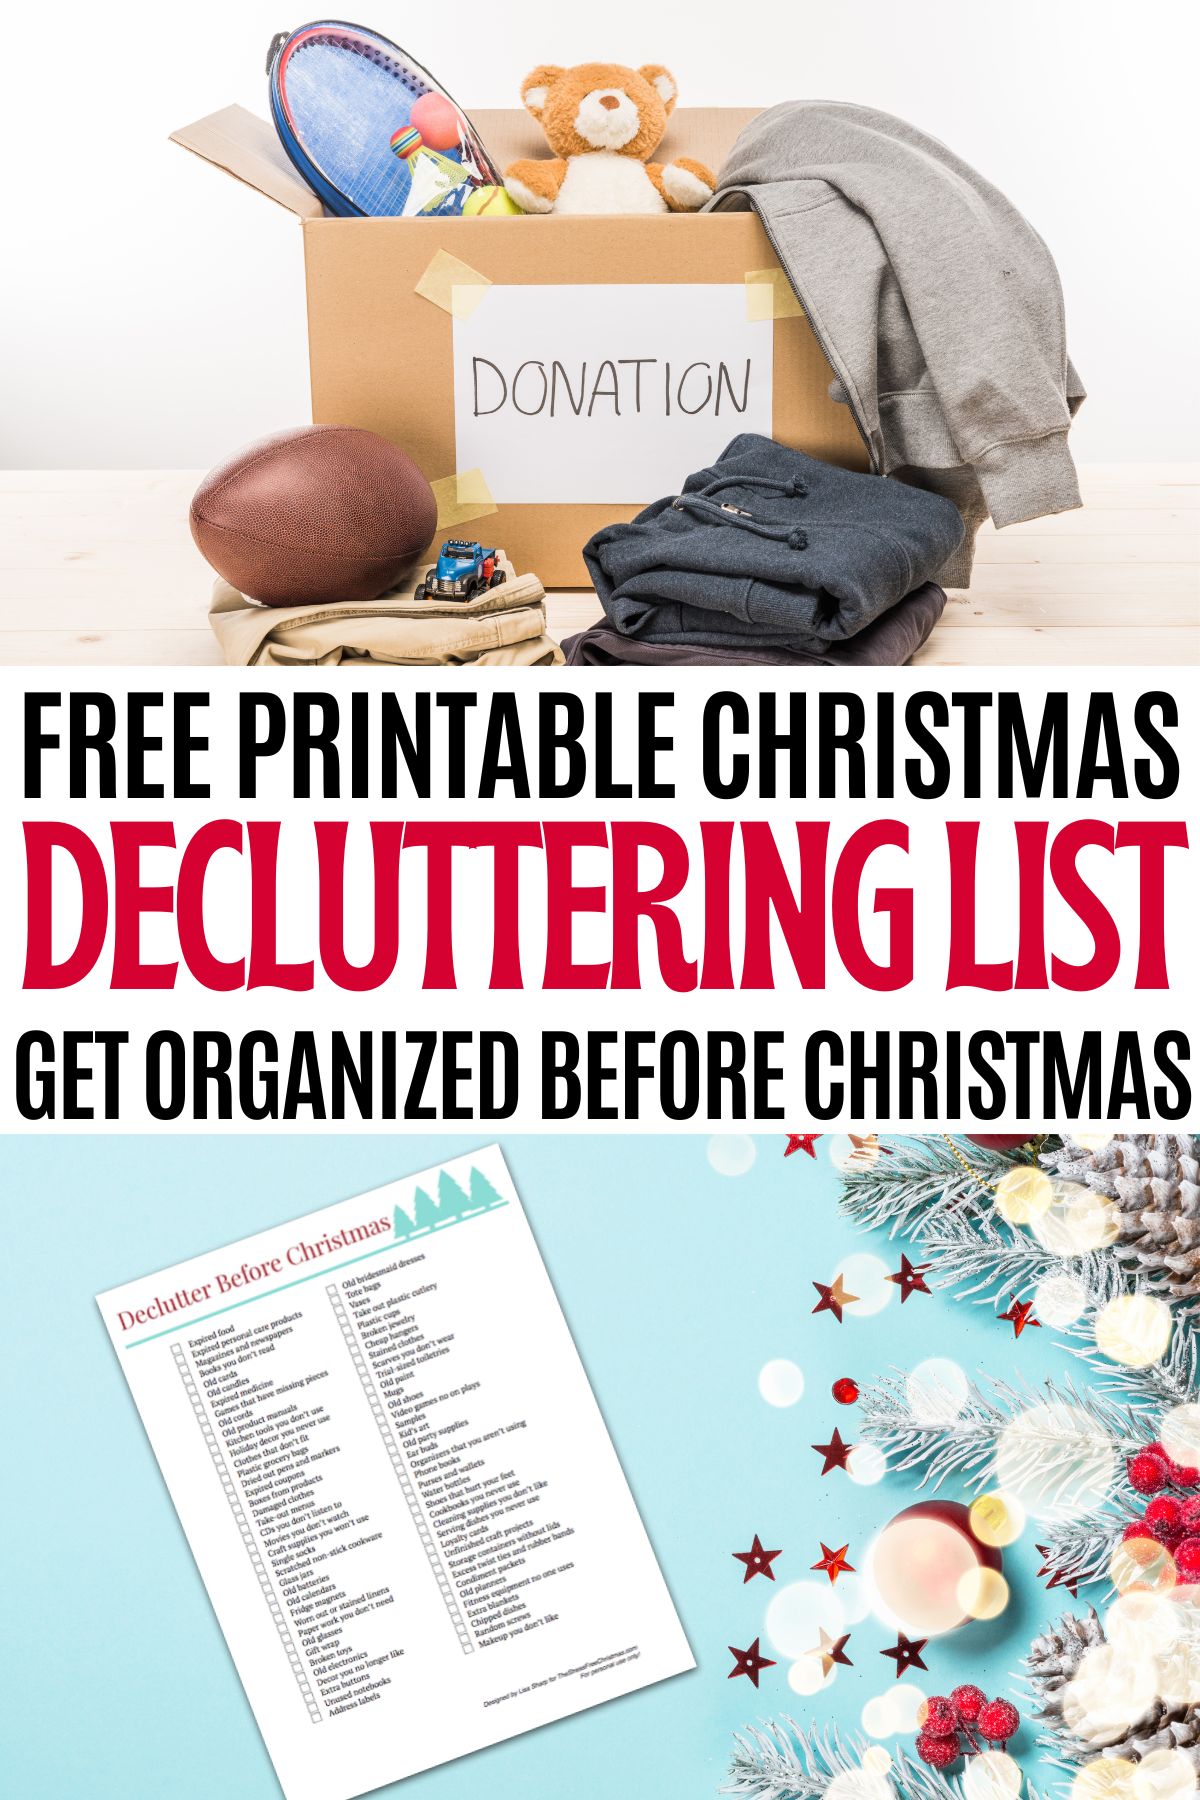 https://thestressfreechristmas.com/wp-content/uploads/2018/07/christmas-free-decluttering-list-pin-2.jpg